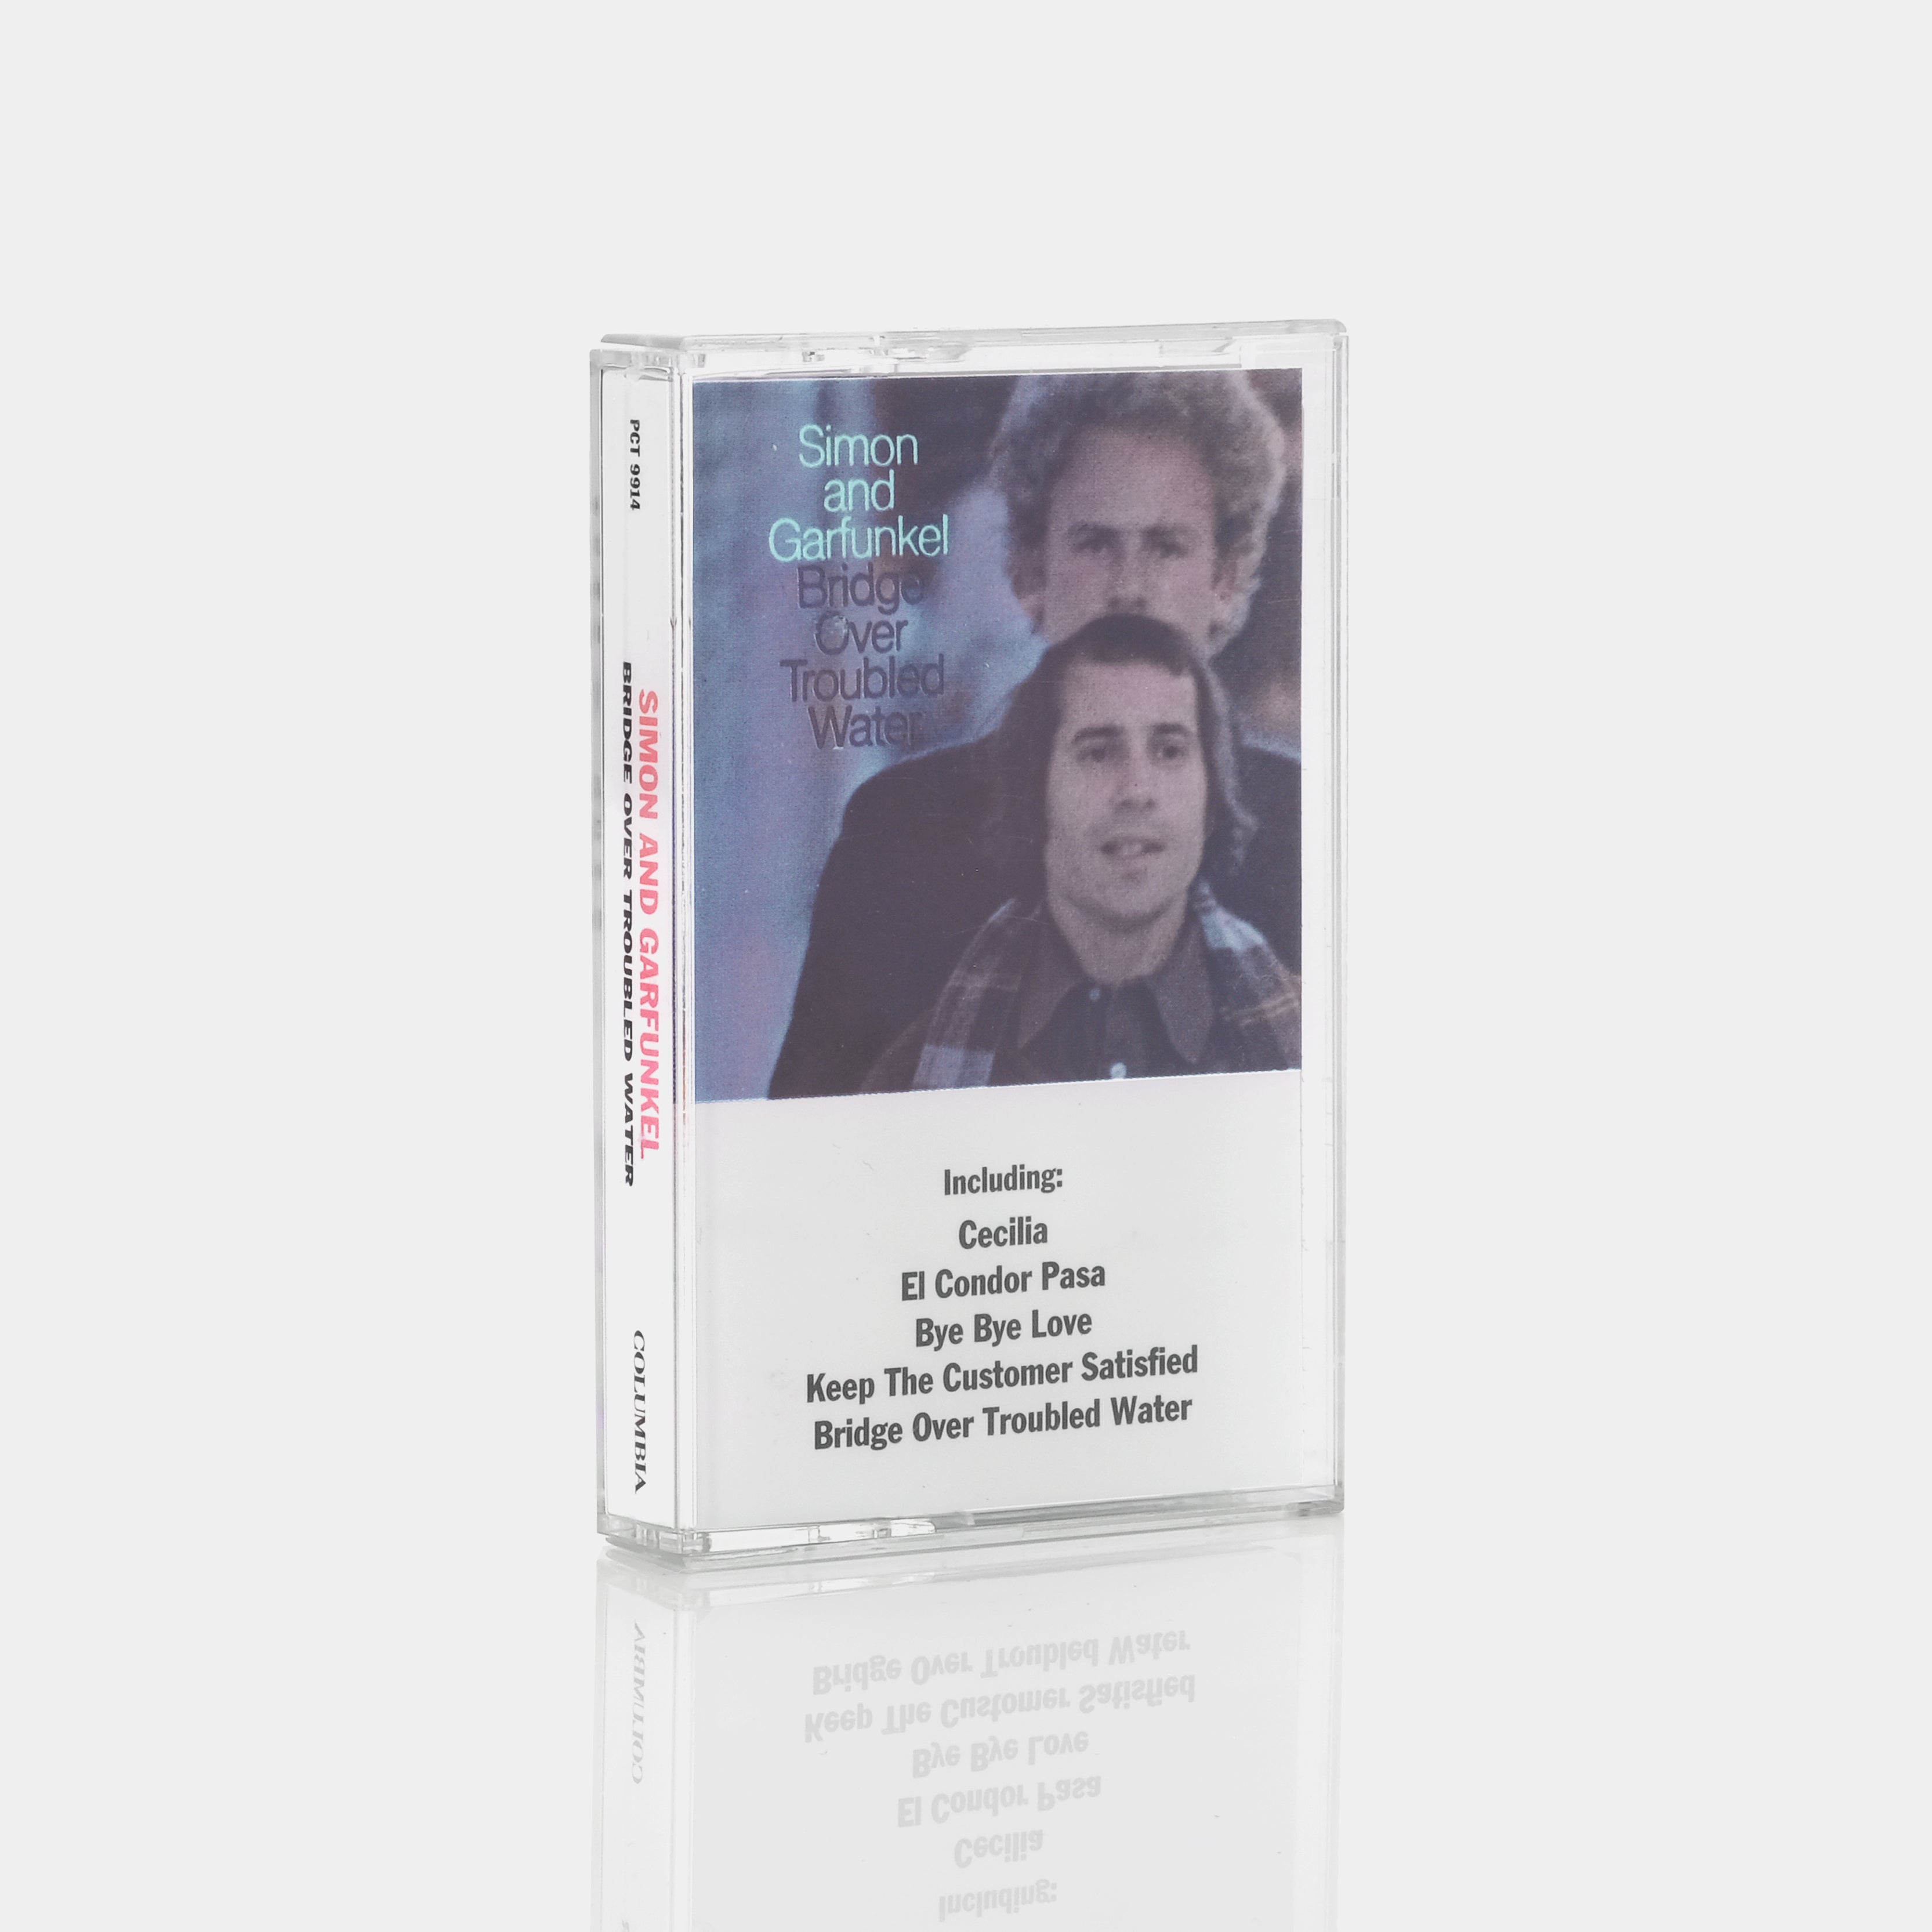 Simon And Garfunkel - Bridge Over Troubled Water Cassette Tape